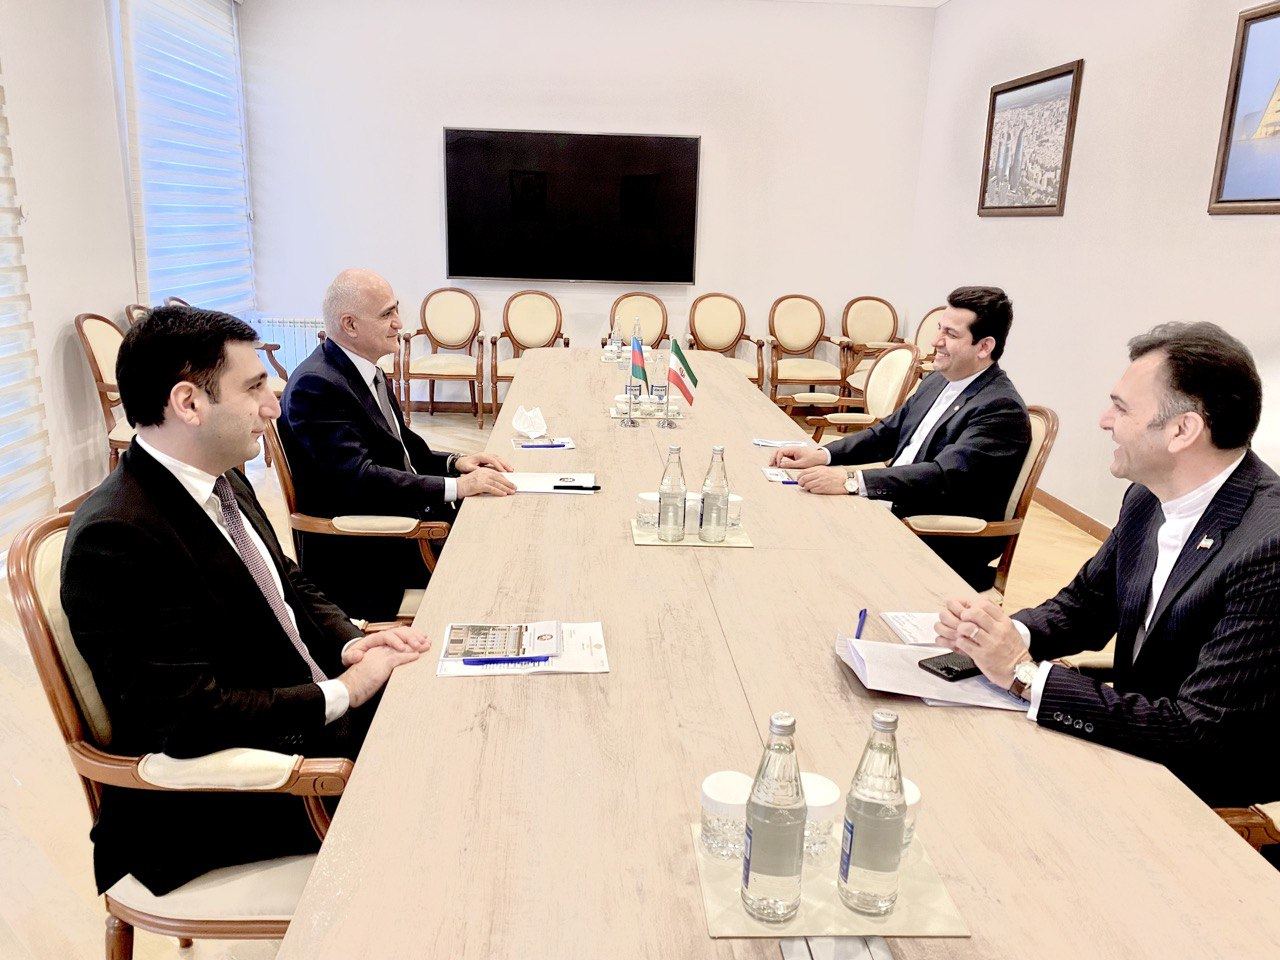 Azerbaijan, Iran implementing important projects - ambassador